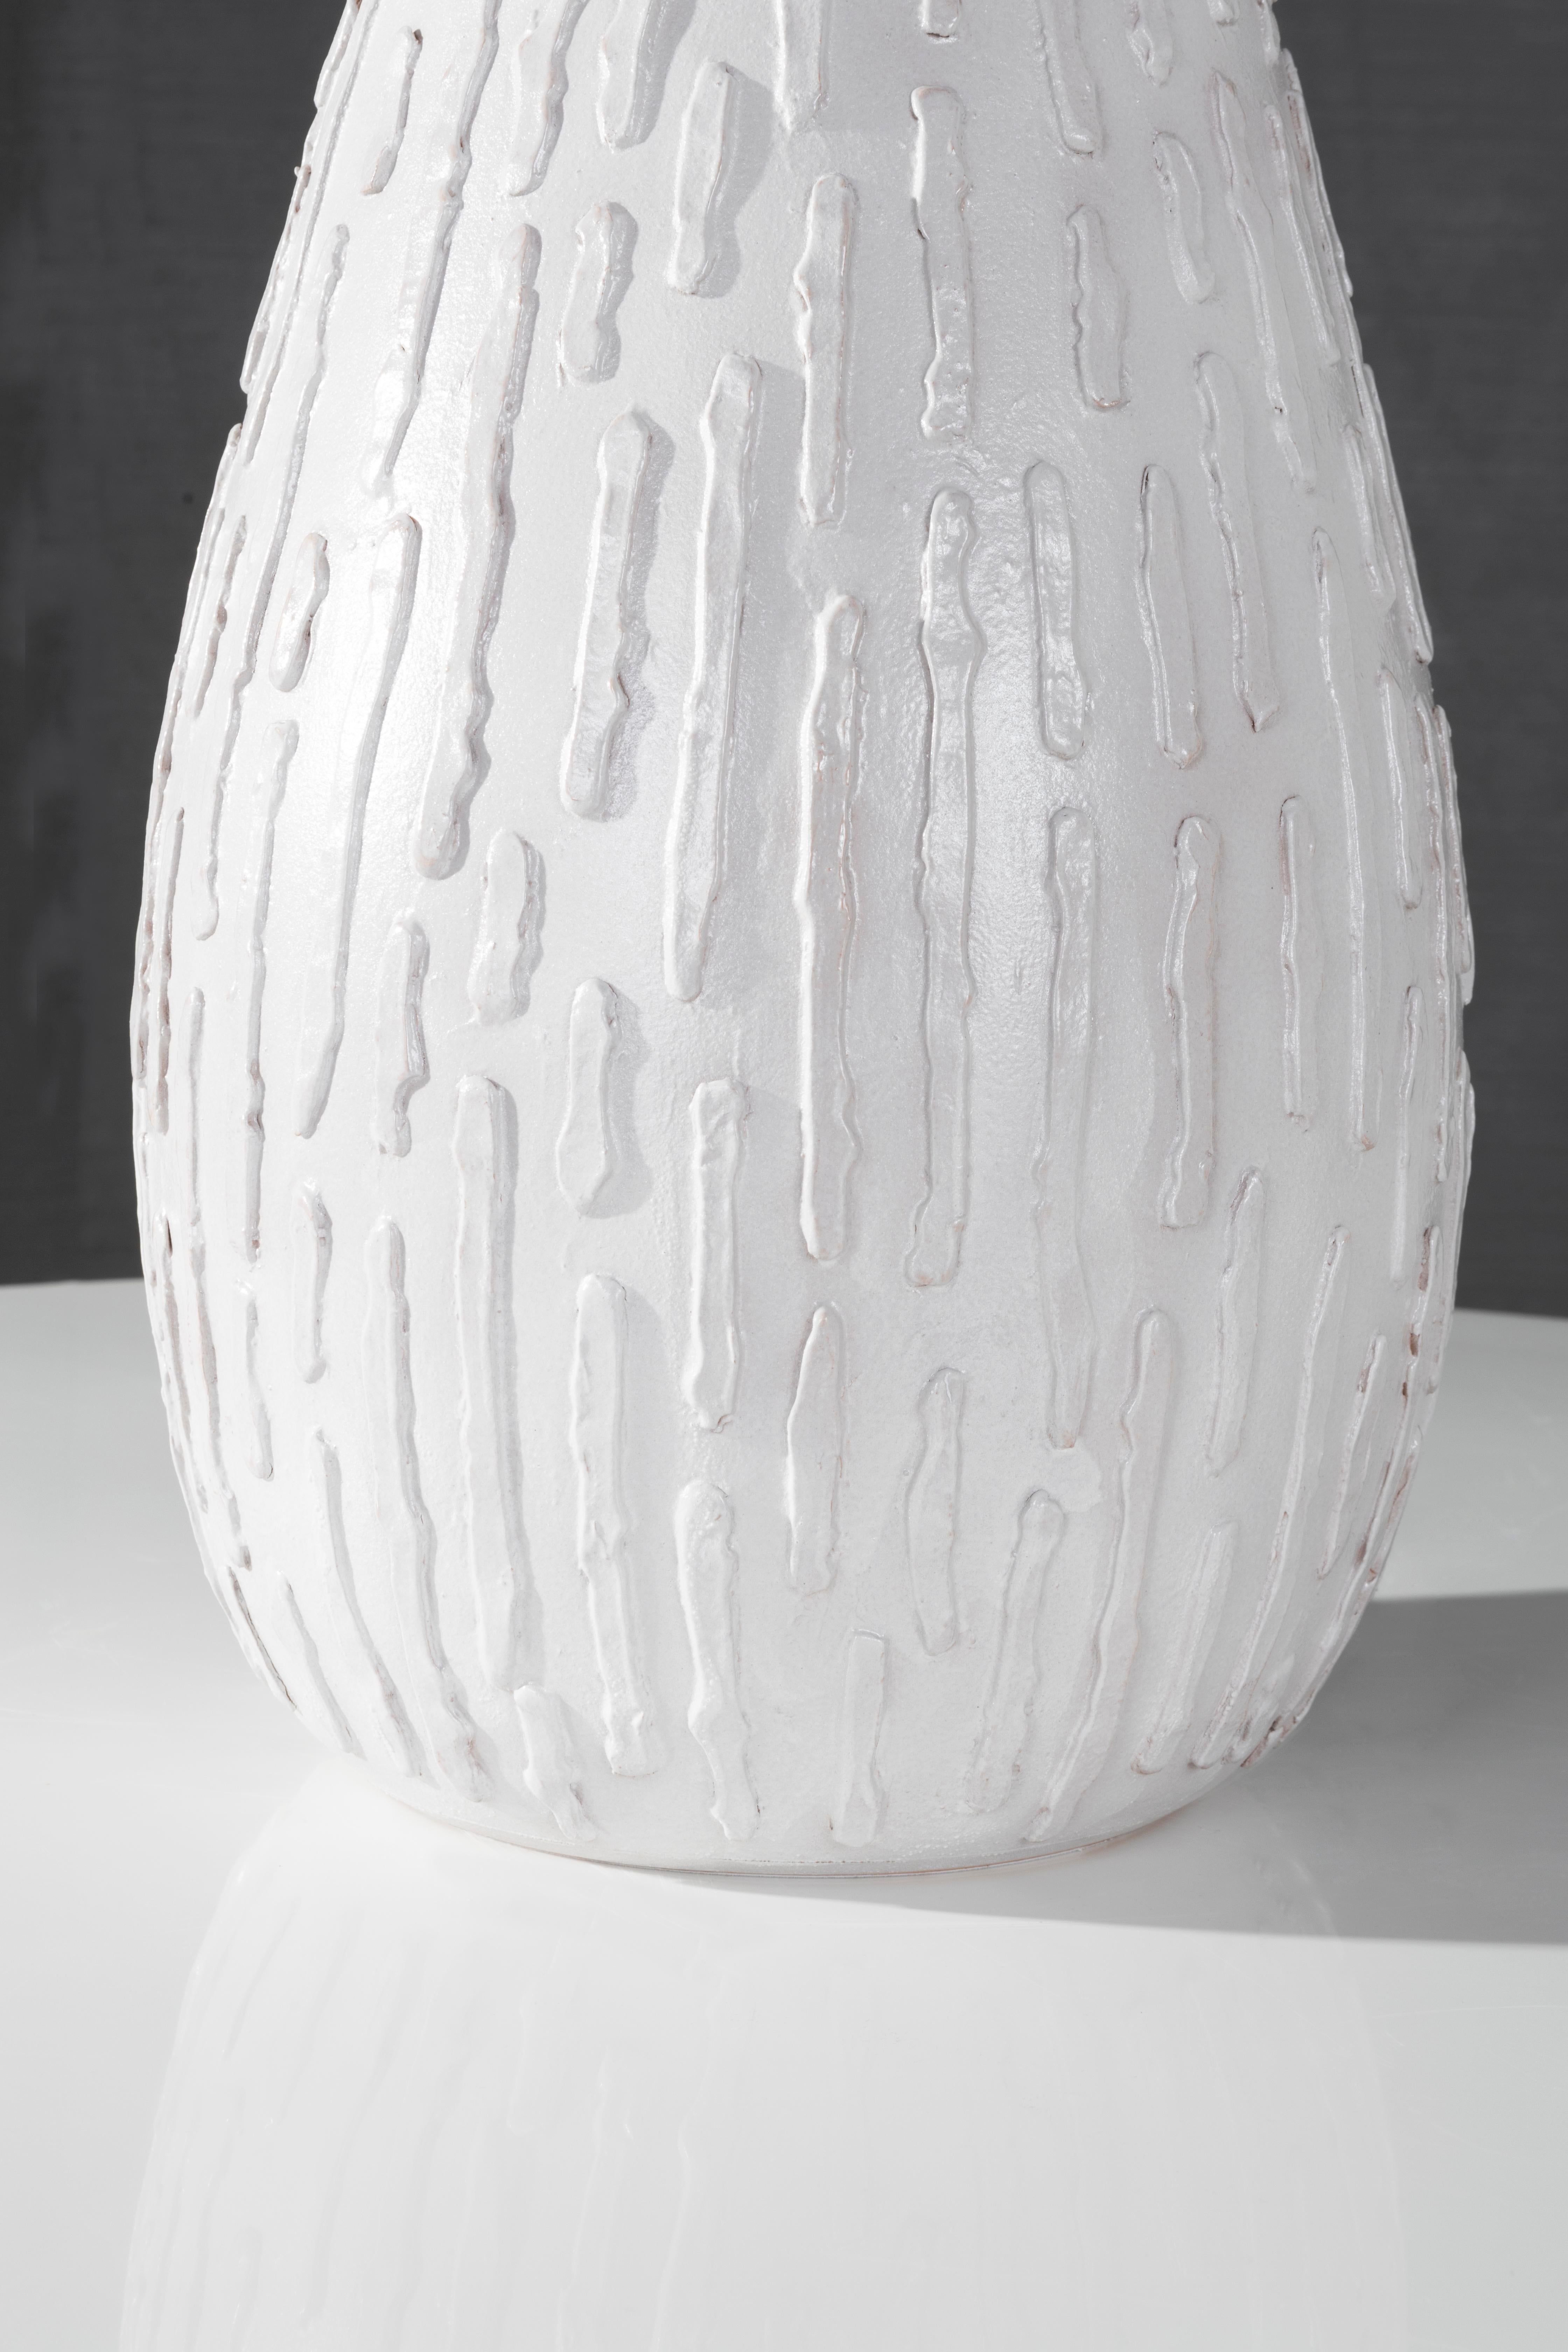 Contemporary New Reng, Ribu, Glazed Terracotta Gourd Form Vase For Sale